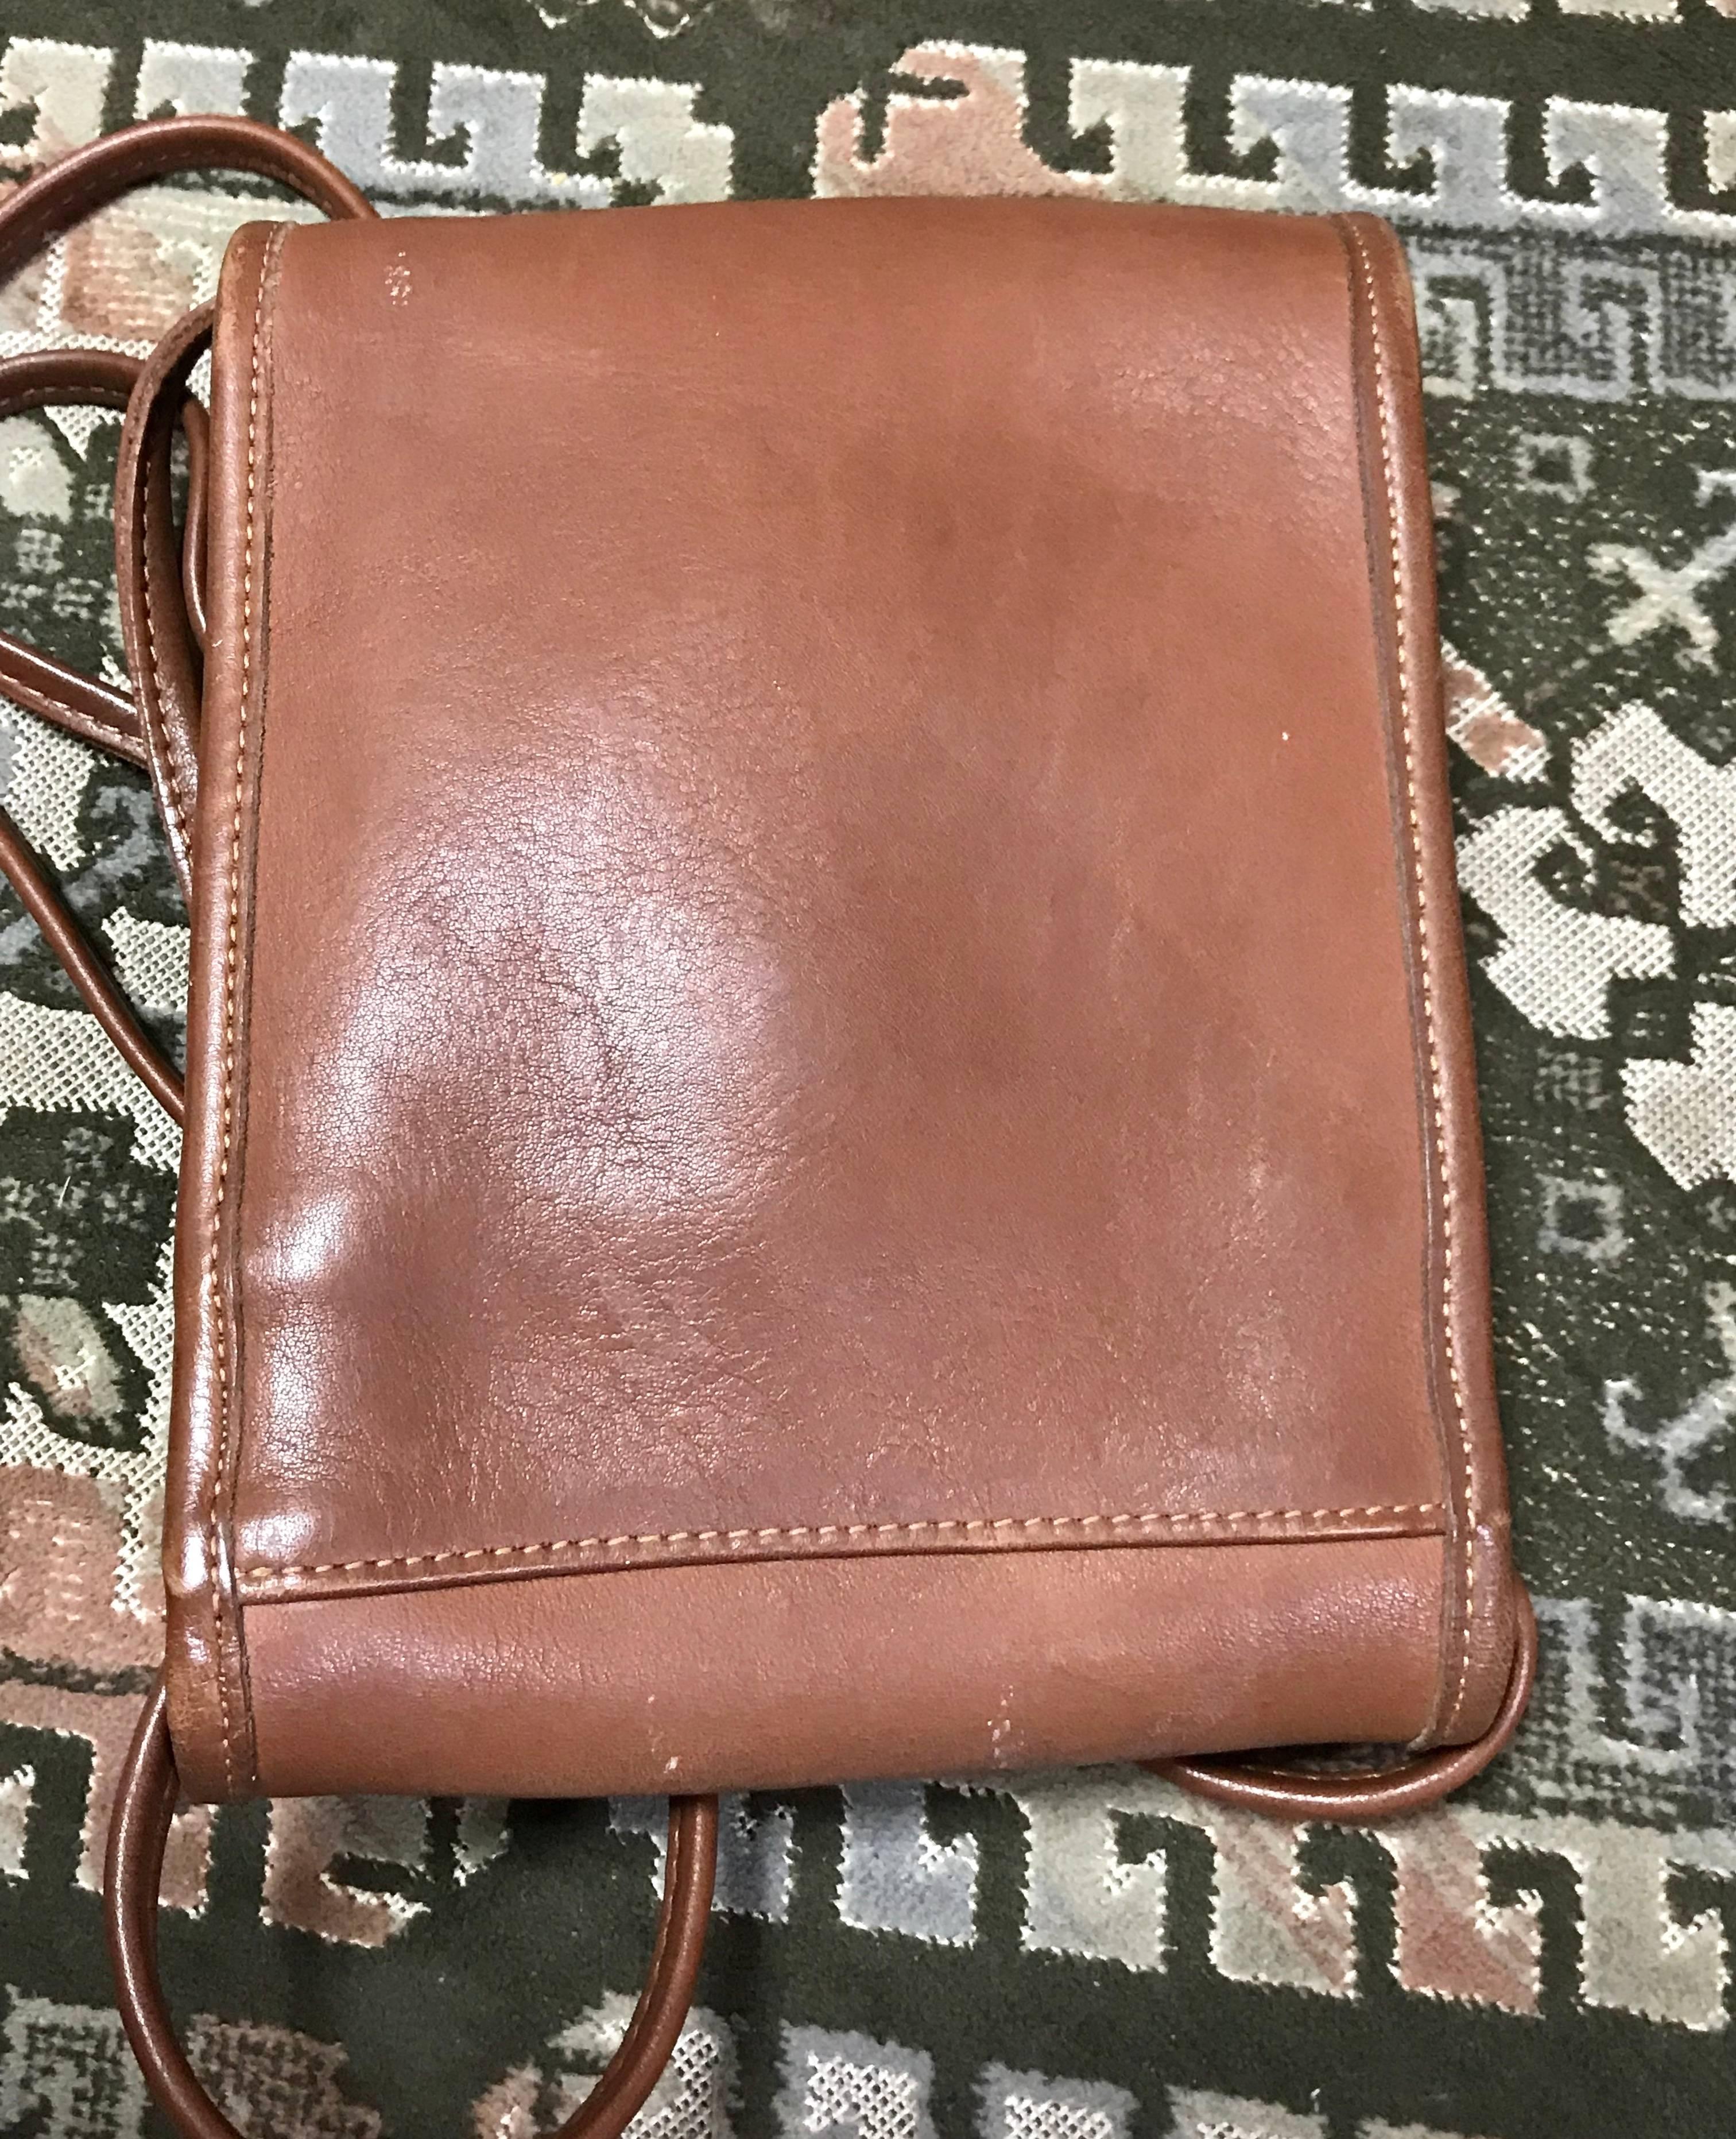 vintage coach brown leather bag